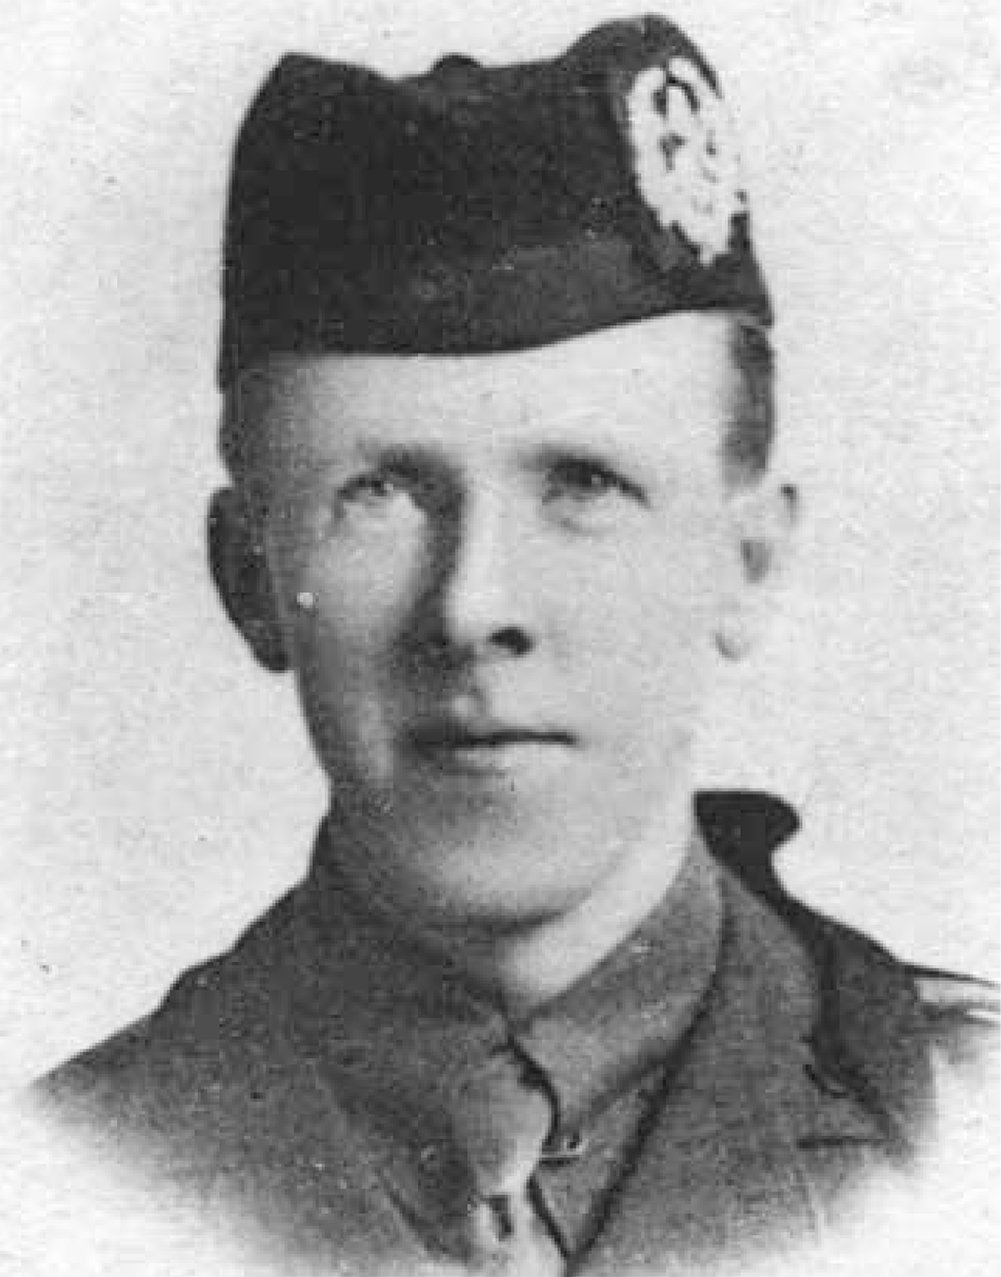 Portrait of Second Lieutenant John Kennedy